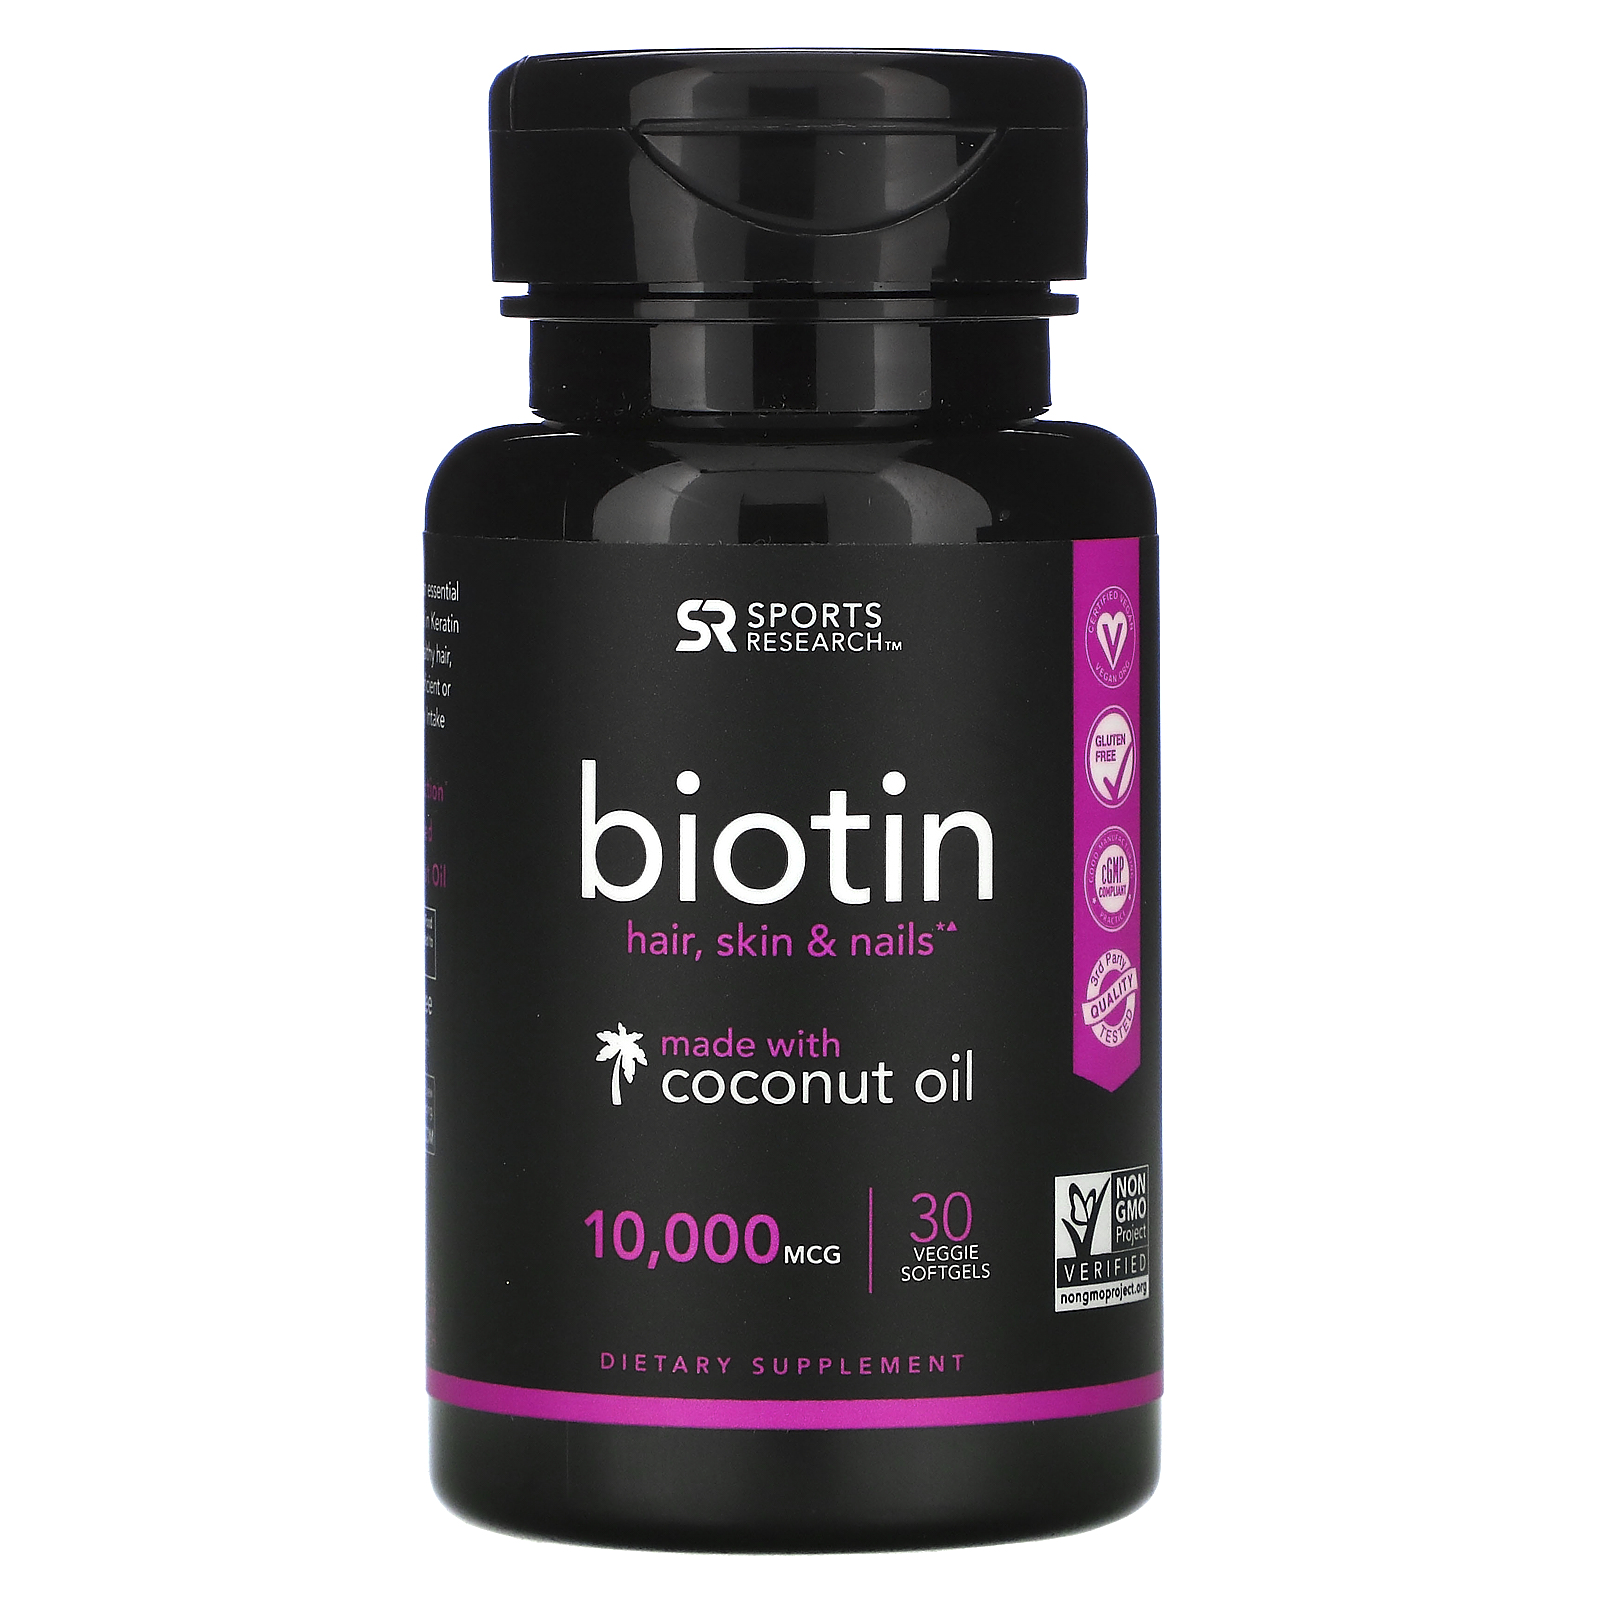 Biotin with Coconut Oil, 10,000 mcg, 30 Veggie Softgels 23249011385 | eBay